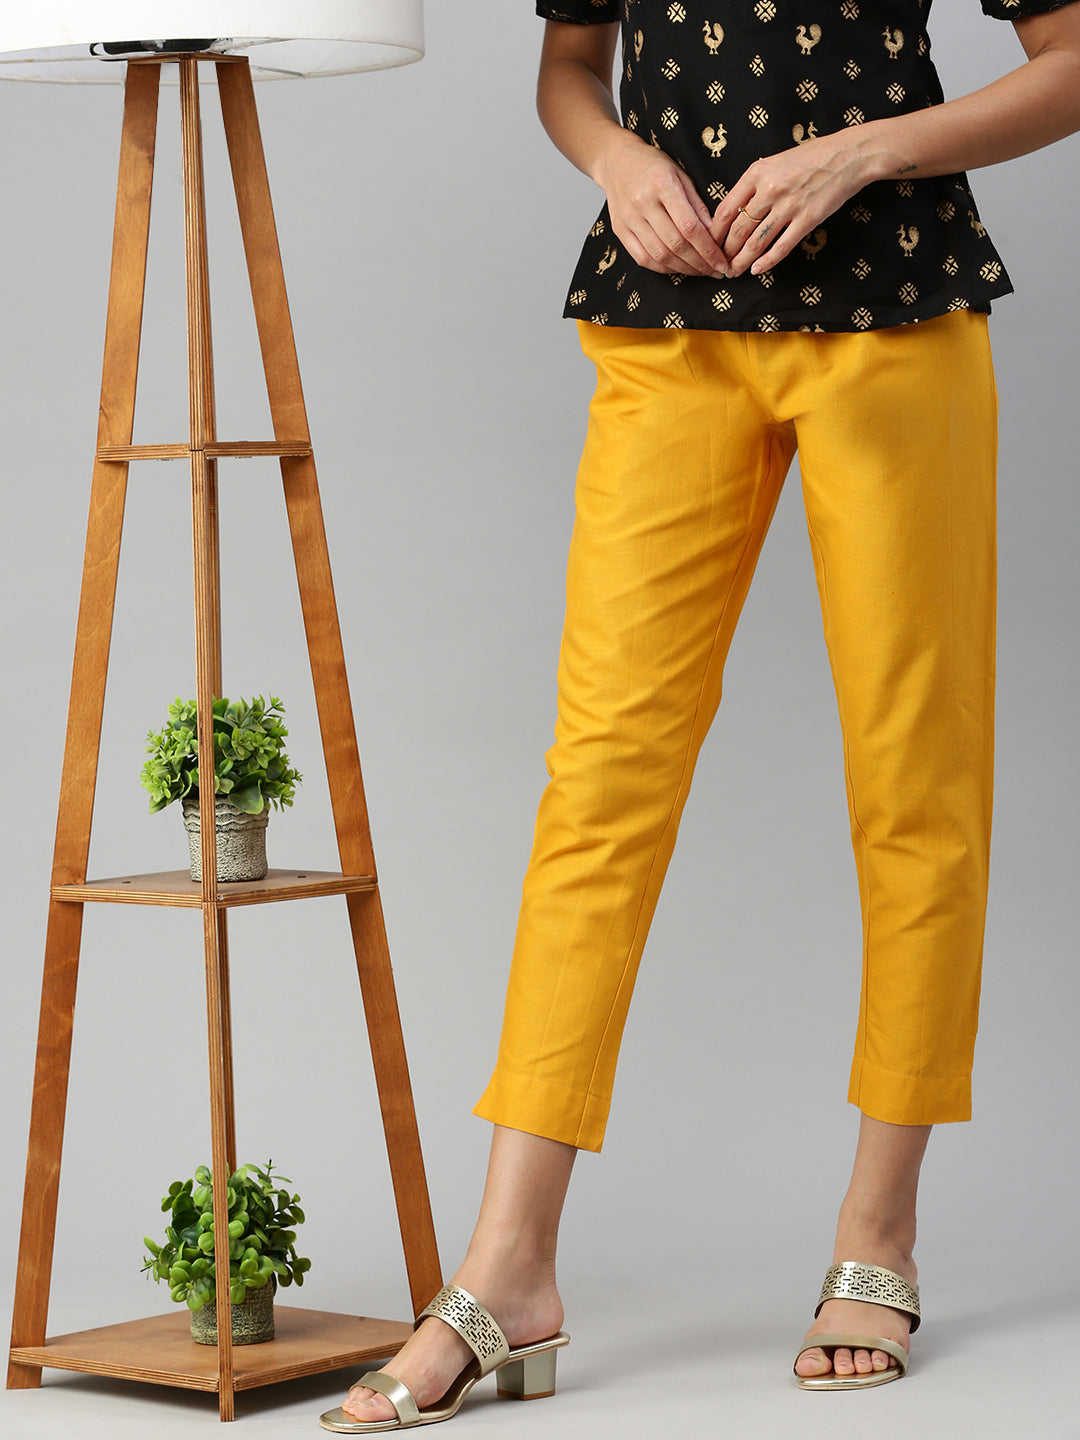 Prisma Fern Kurti Pant - Trendy Clothing for Women